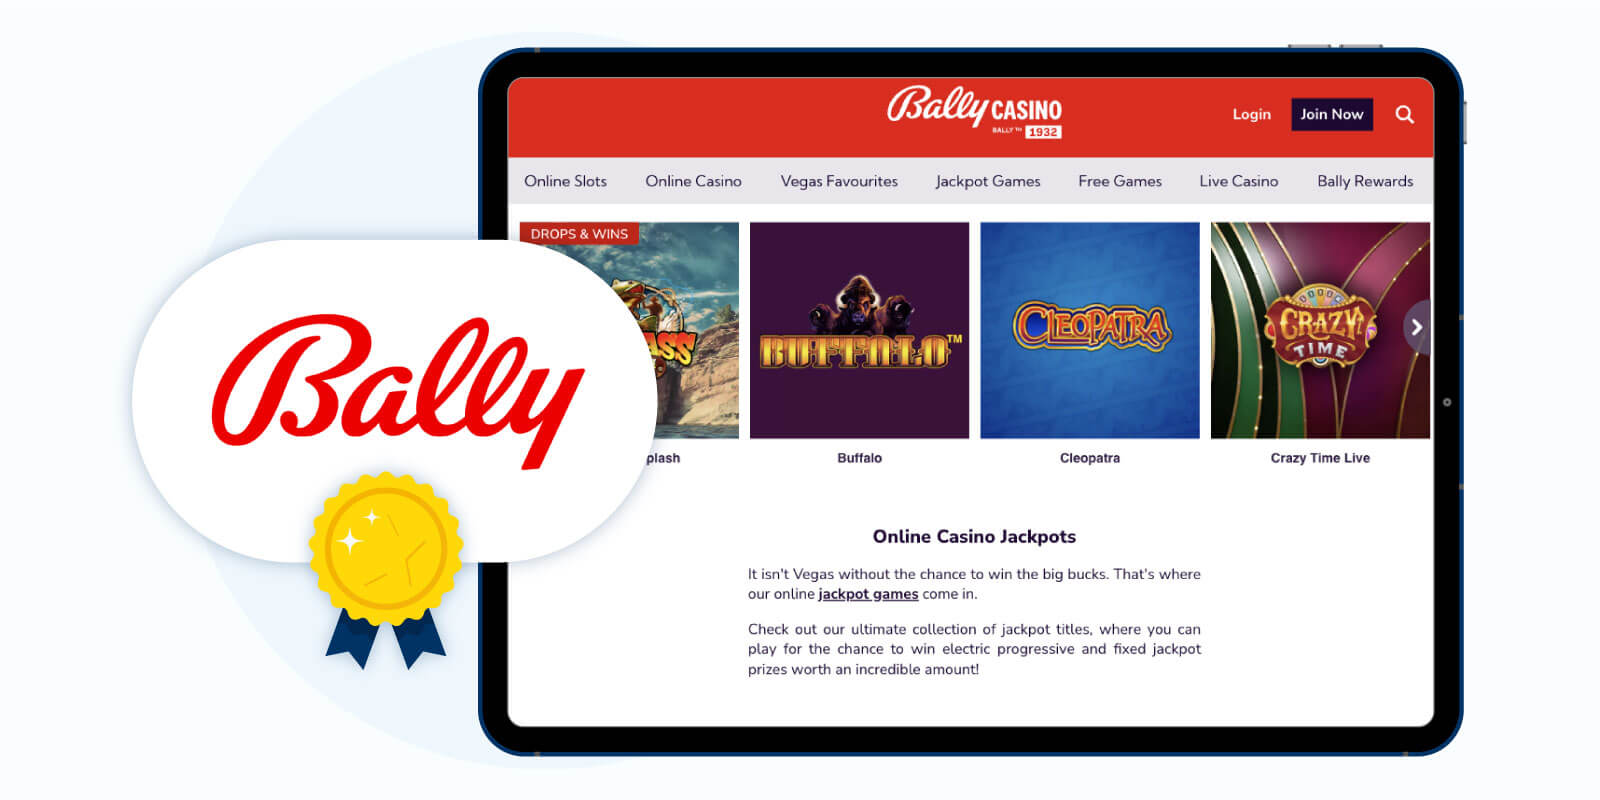 Bally Casino: Best Microgaming Casino in the UK Overall